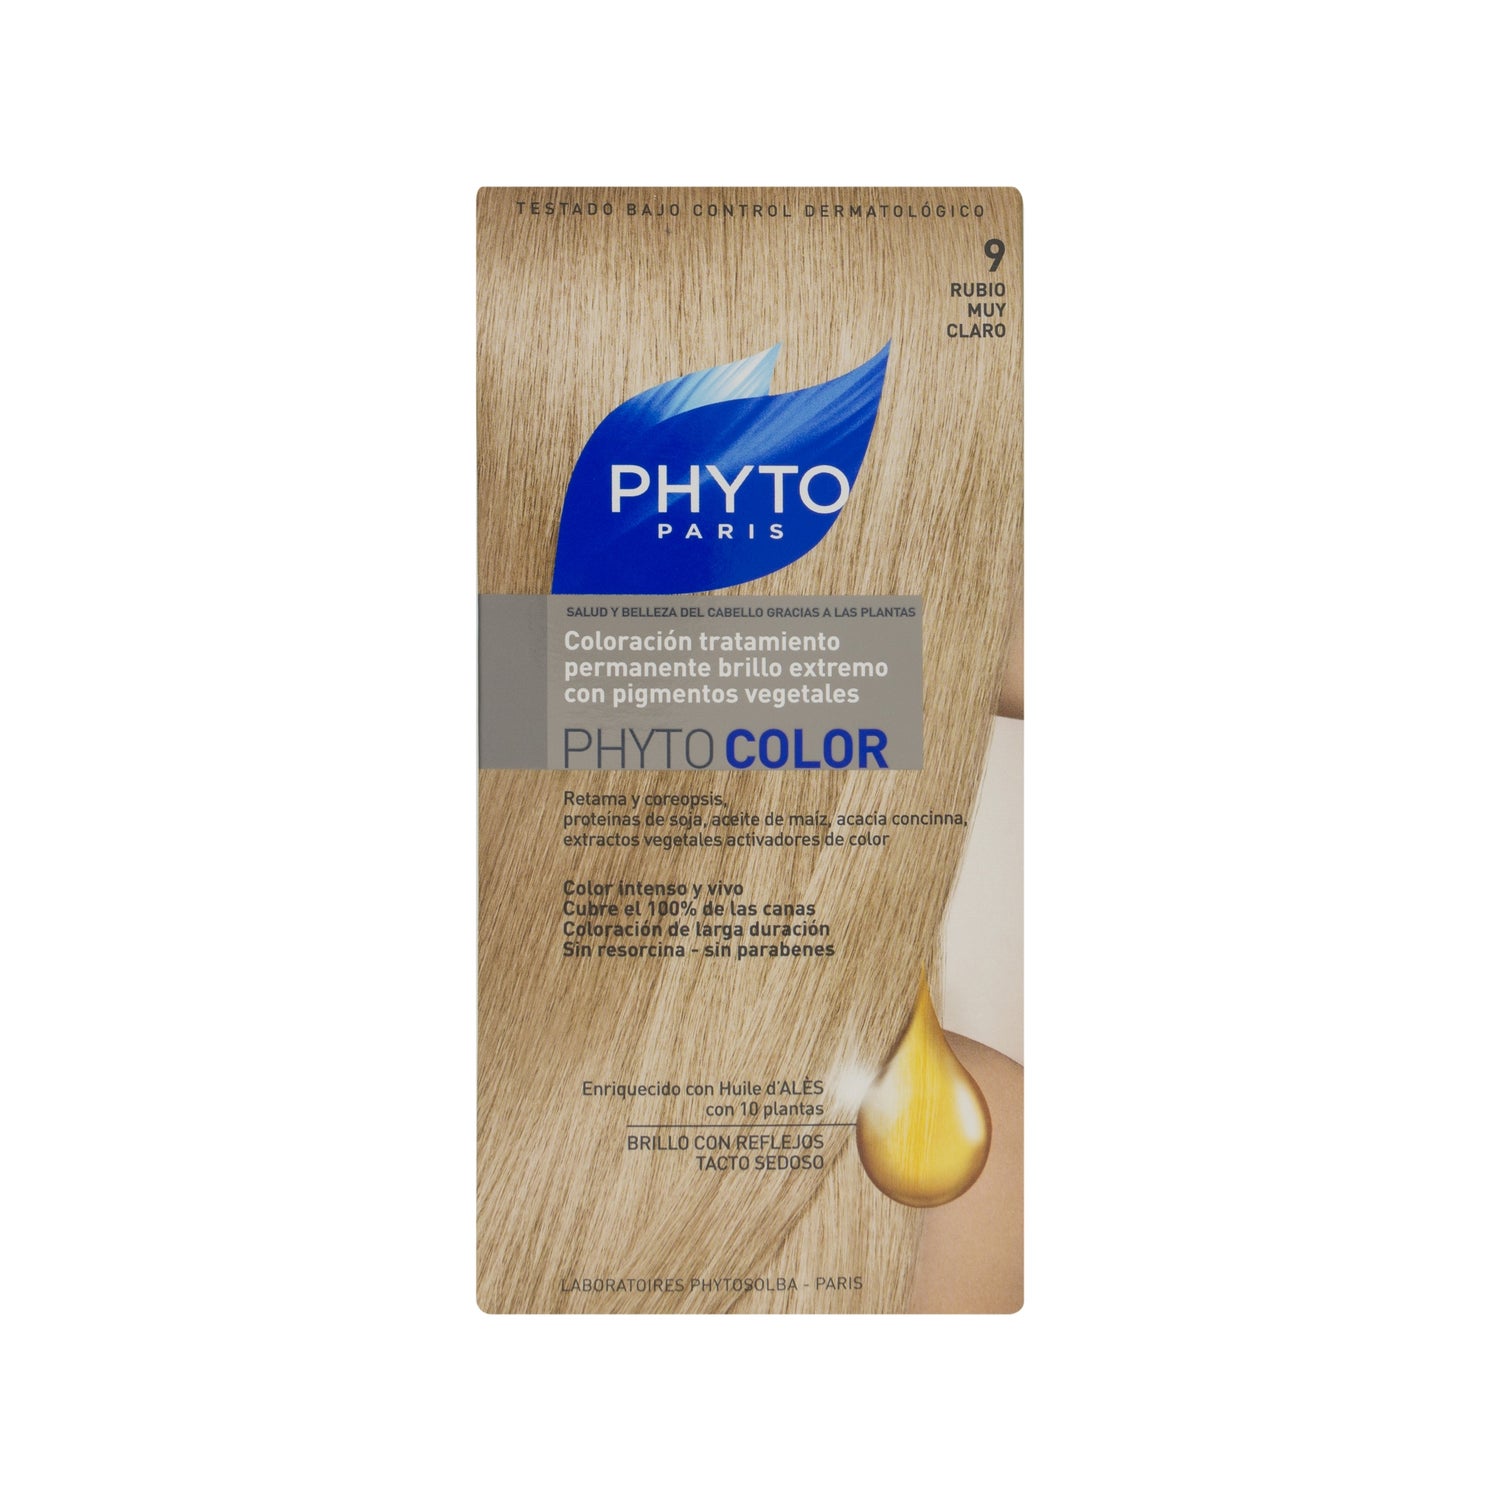 Phyto tinte colour 9 rubio muy claro 1ud | PromoFarma